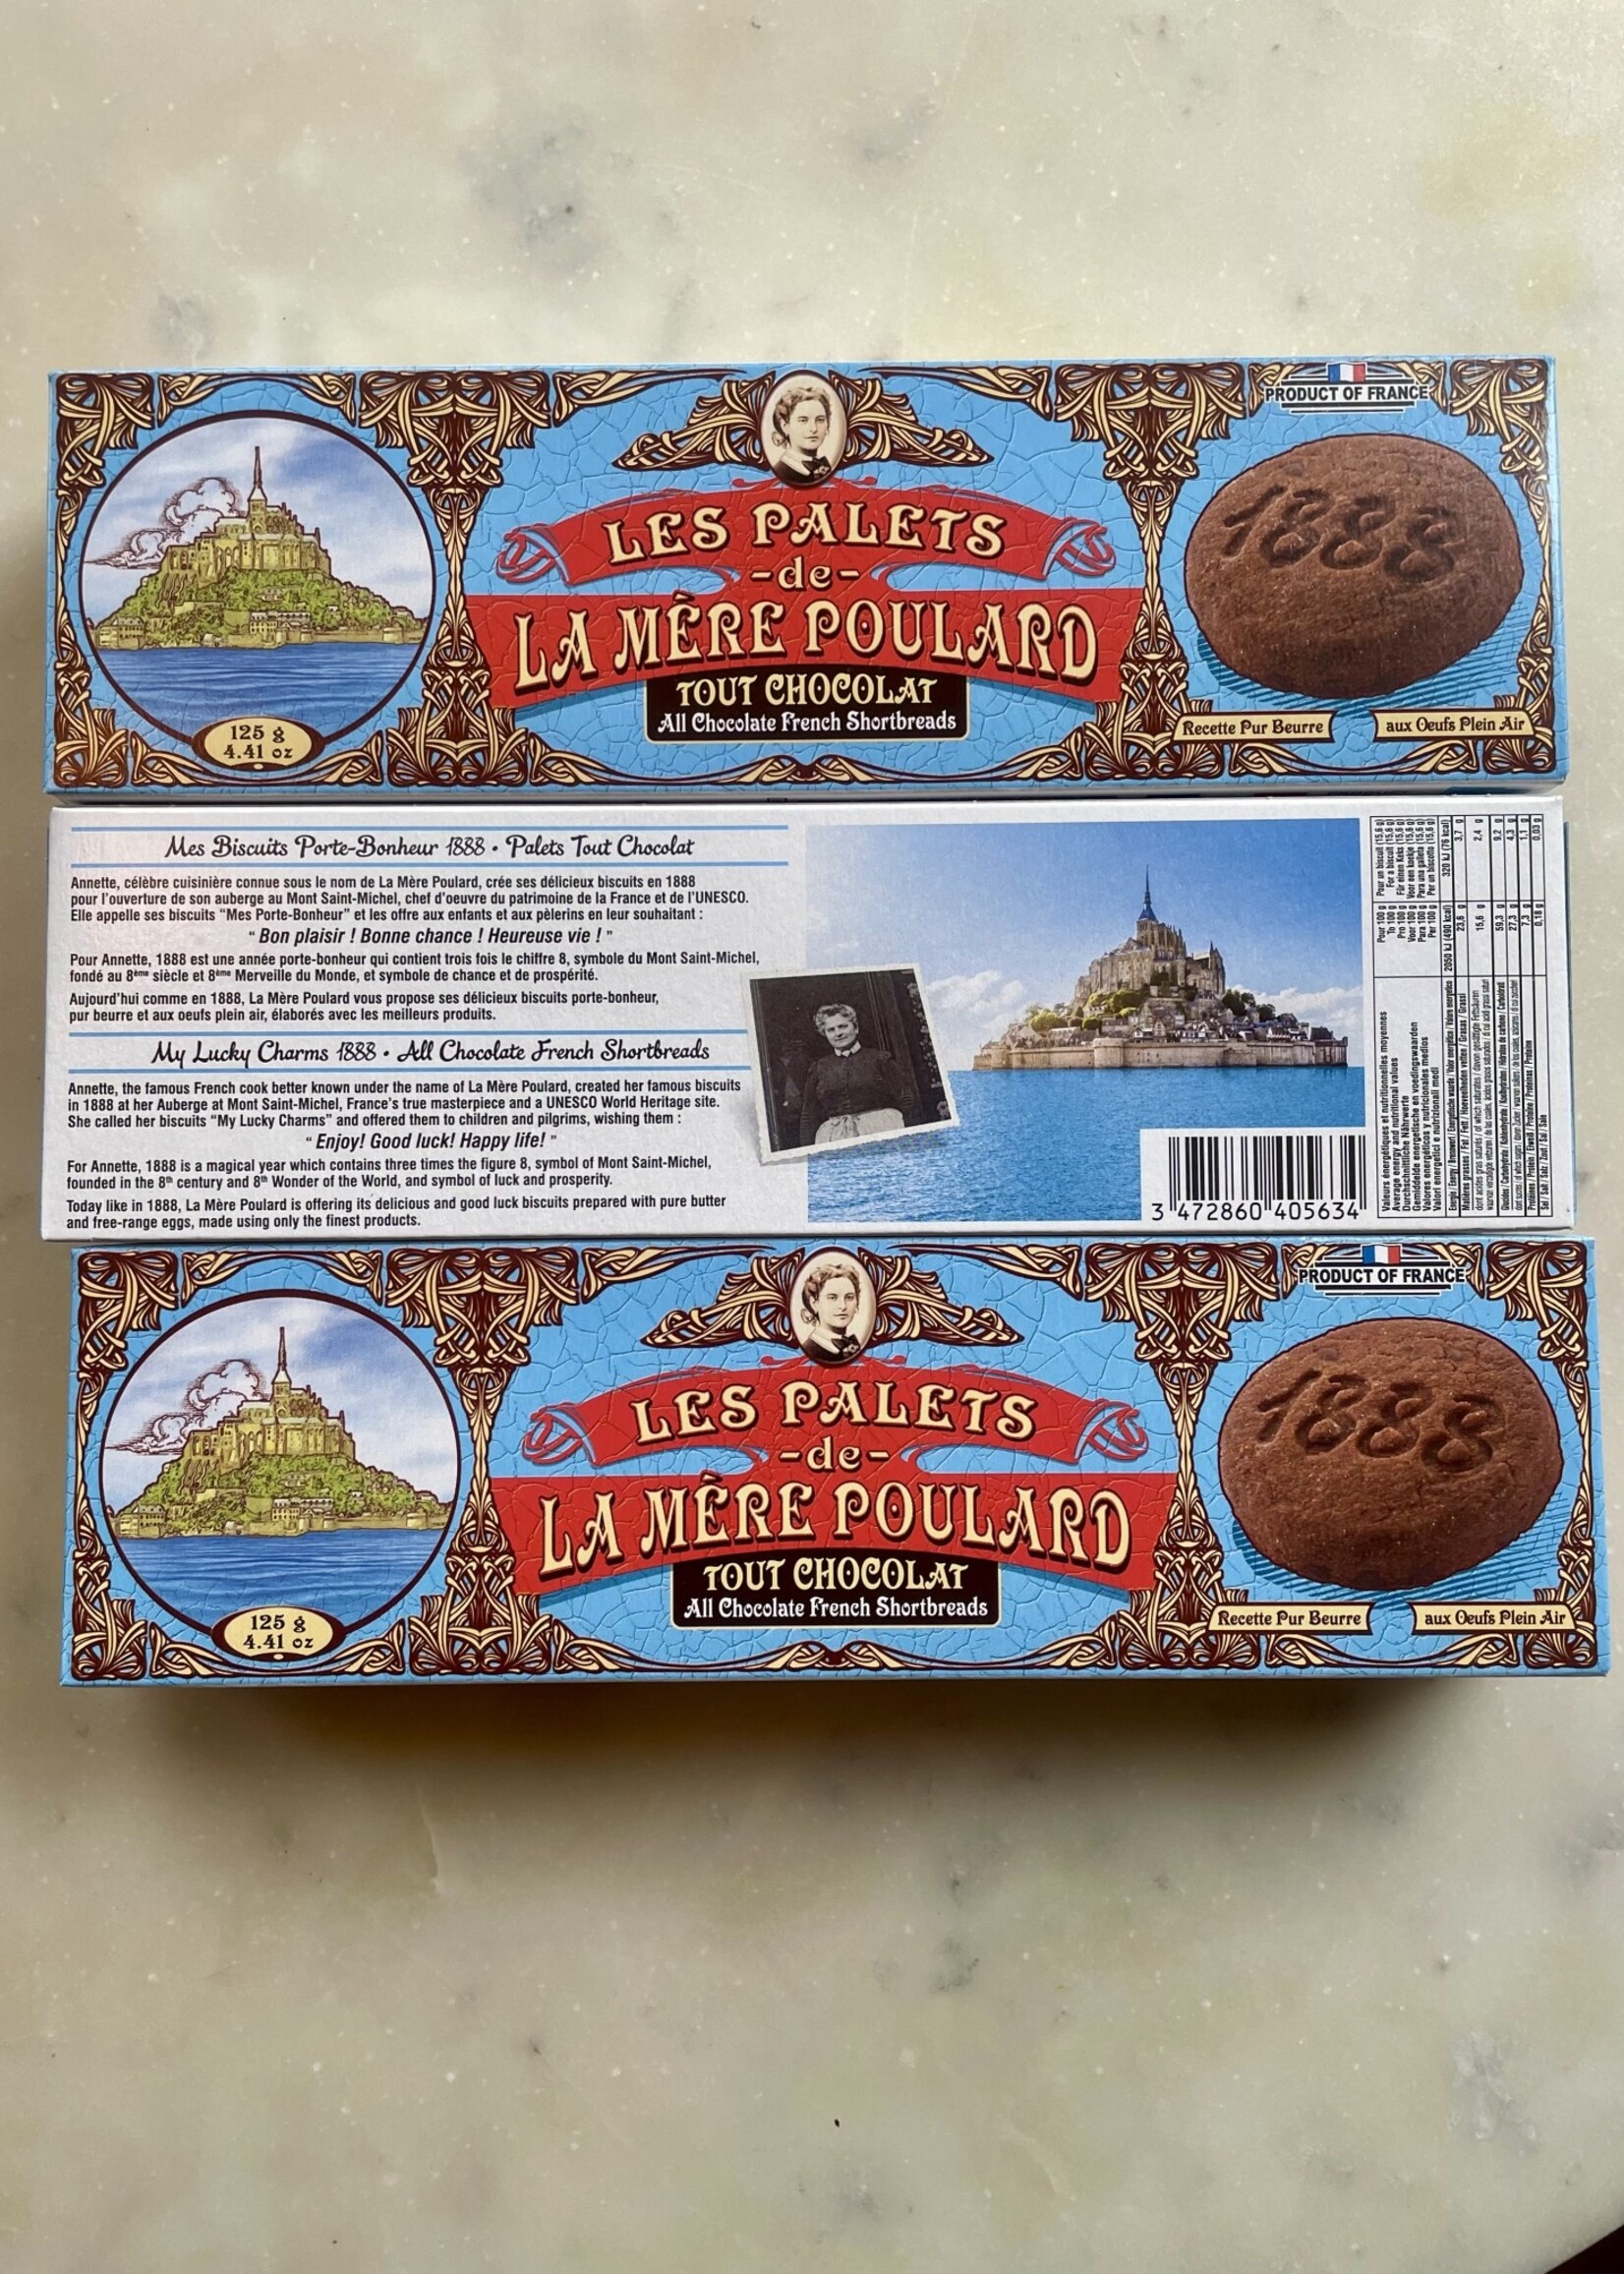 La Mere Poulard Chocolate Cookies 4.41oz (125g)